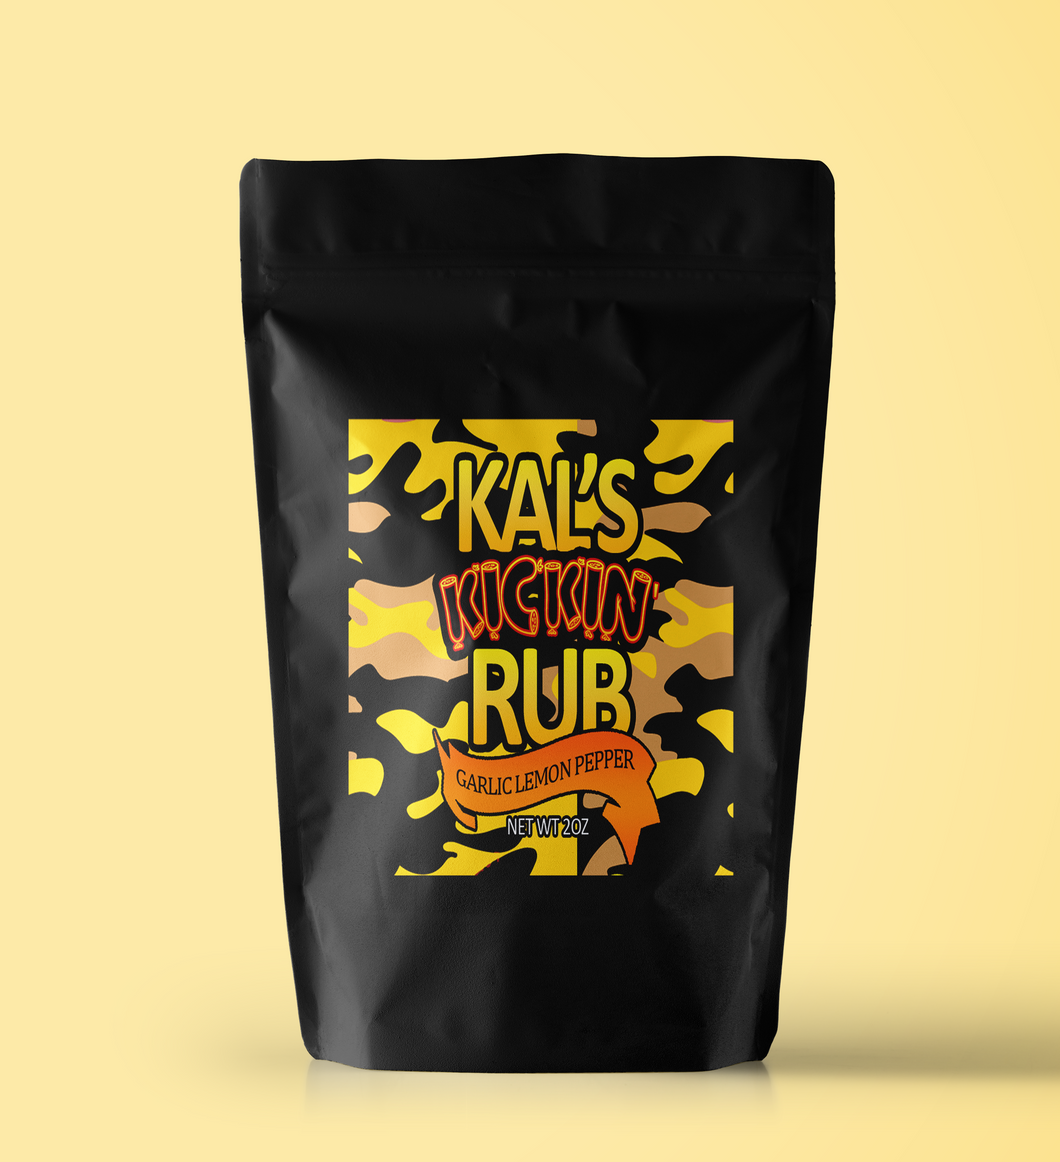 Limited Edition Kal's Kickin' Rub: Garlic Lemon Pepper 2oz